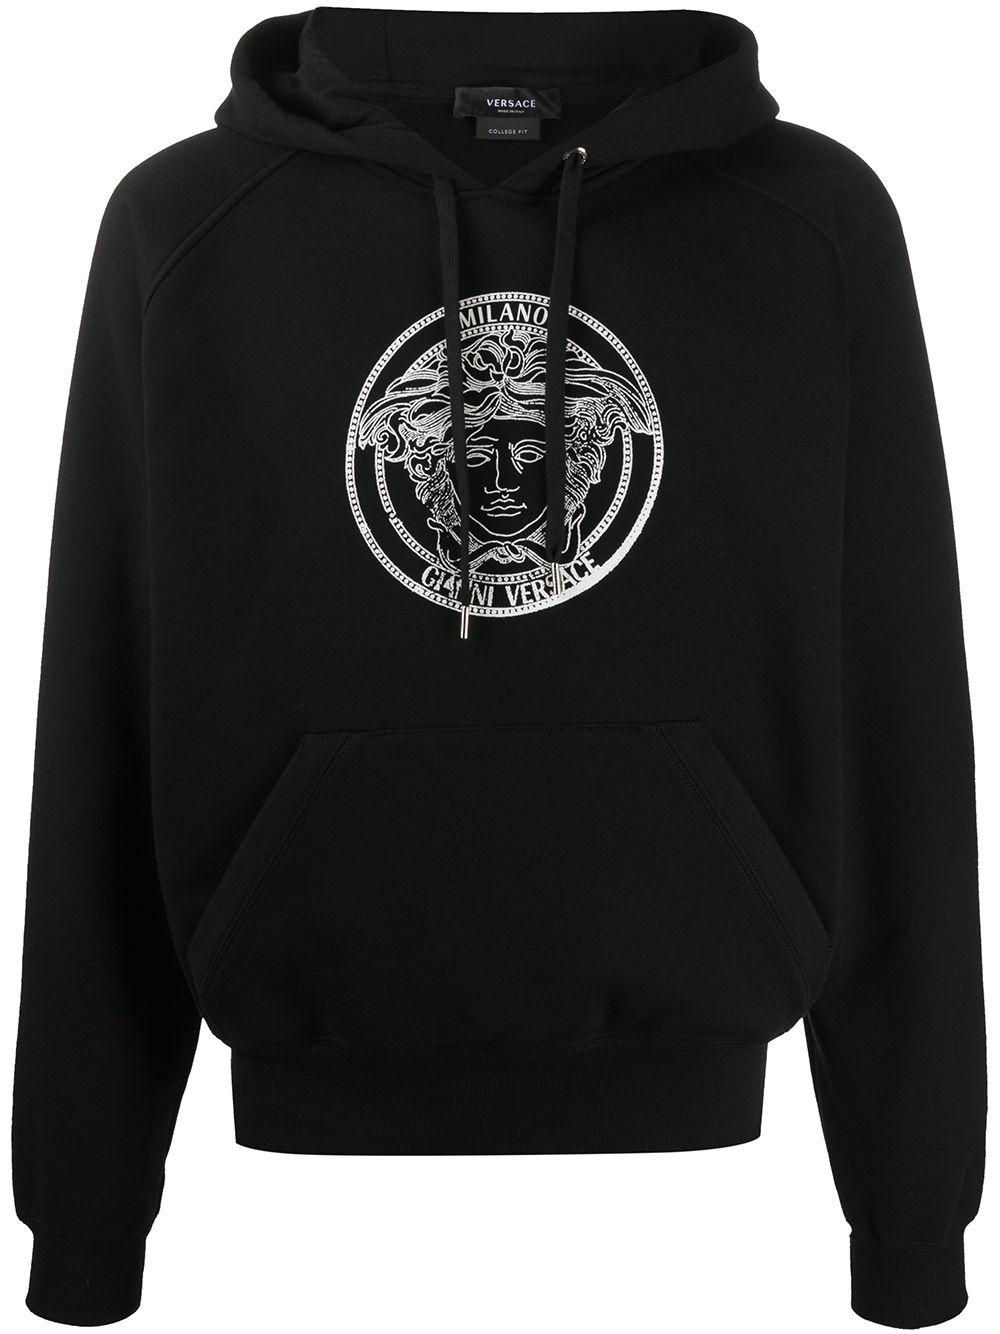 Versace Cotton Medusa Logo Hoodie in Nero (Black) for Men - Save 46% - Lyst